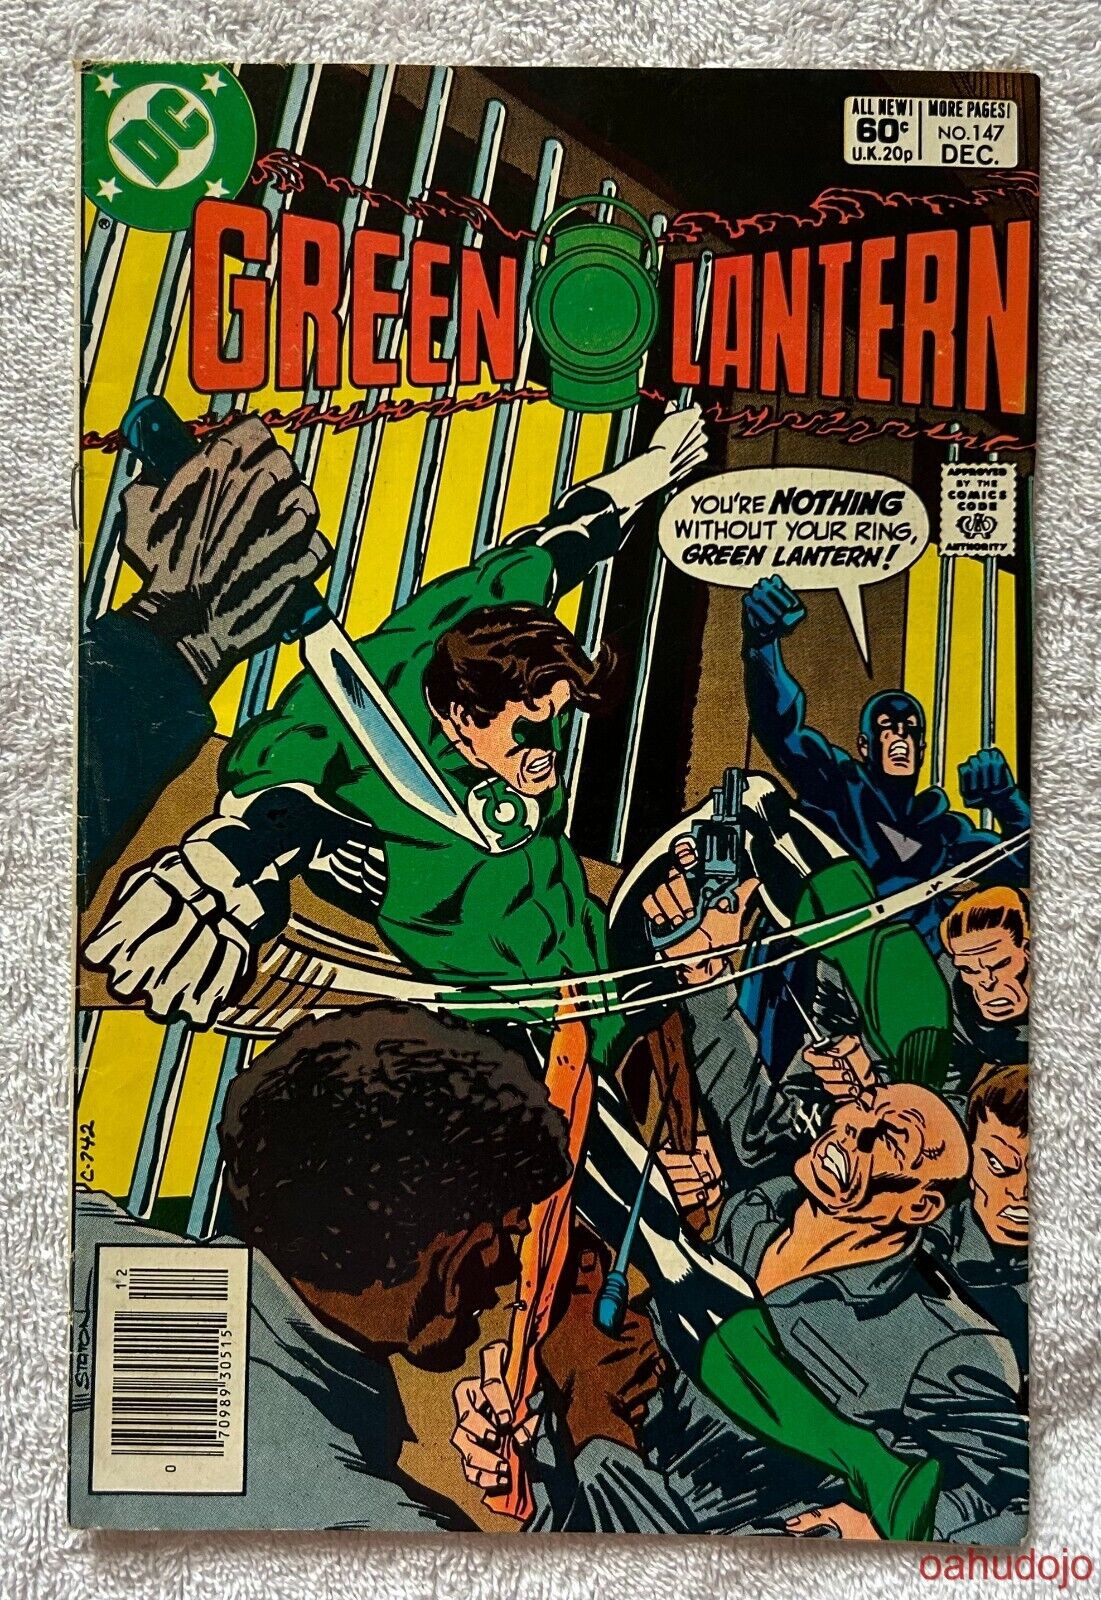 DC THE GREEN LANTERN #147 2nd Series "Do Not a Prison Make" December 1981 VF*